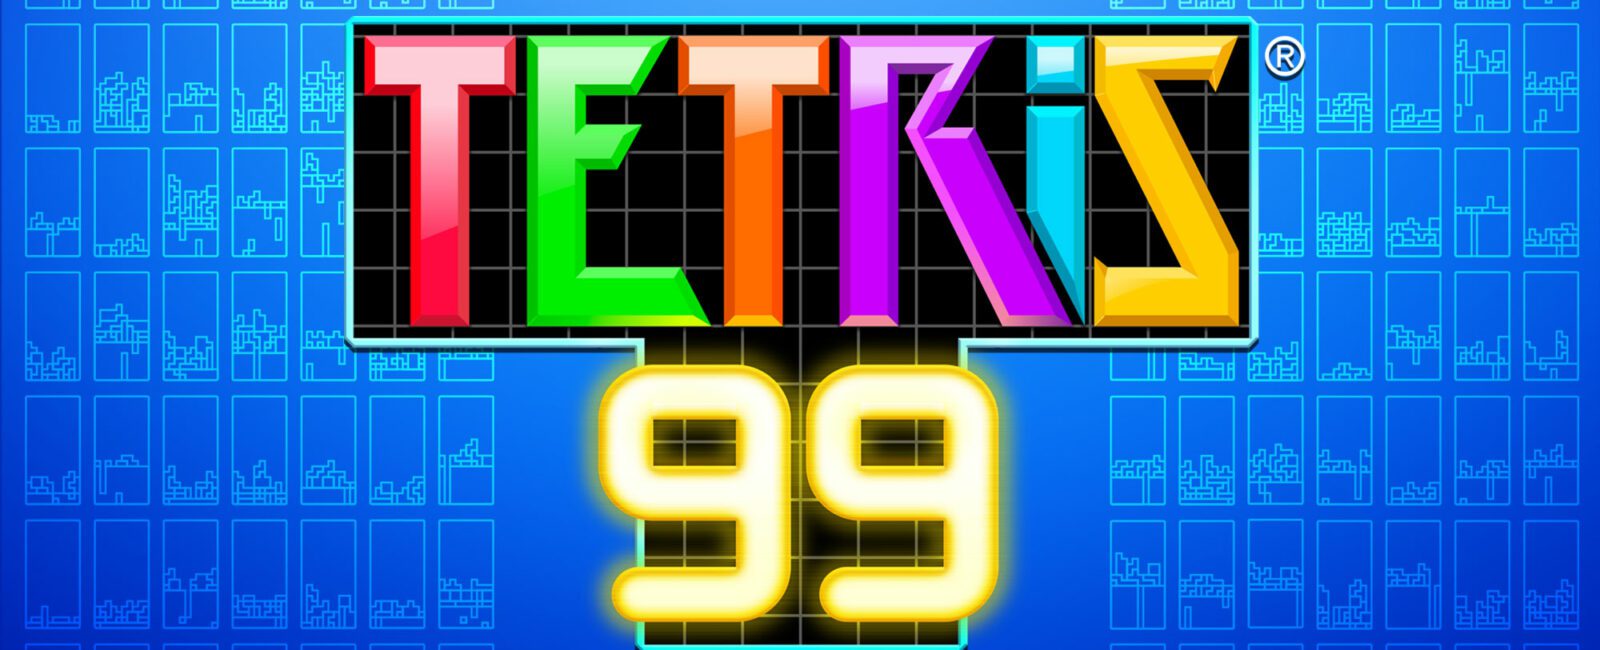 Header Tetris 99